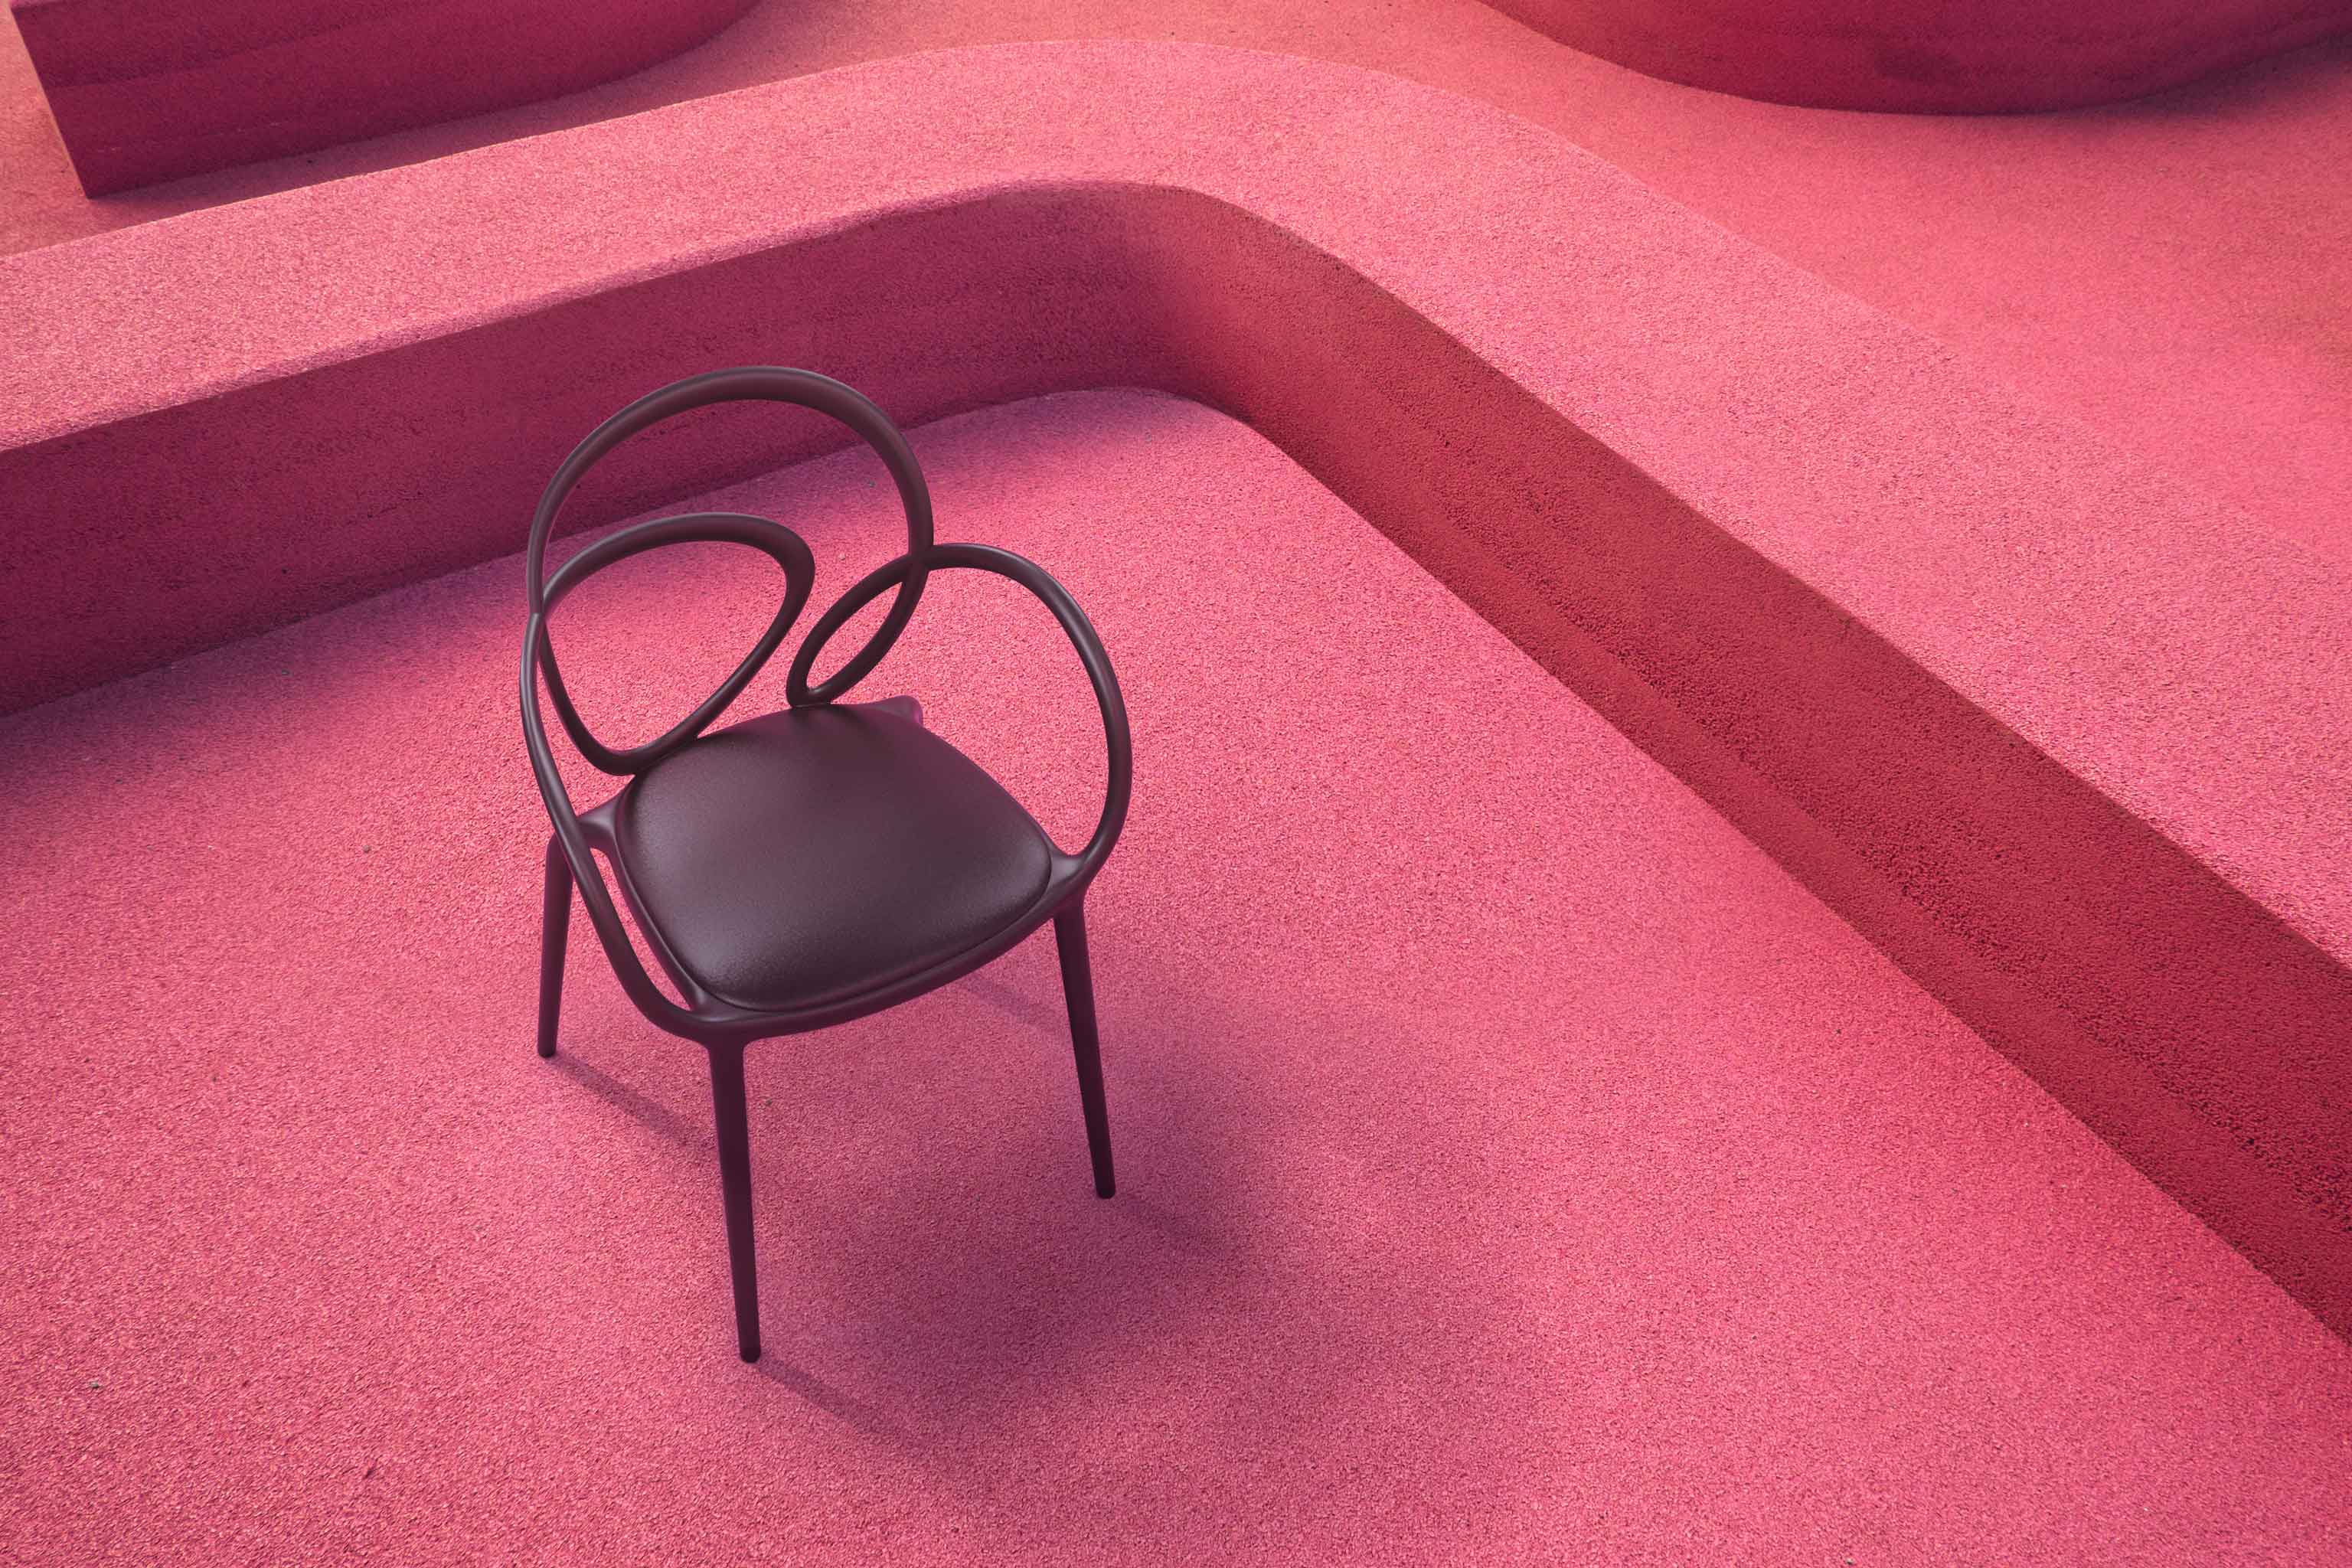 LOOP chair with cushion black - 2 pieces, QeeBoo, Eye on Design